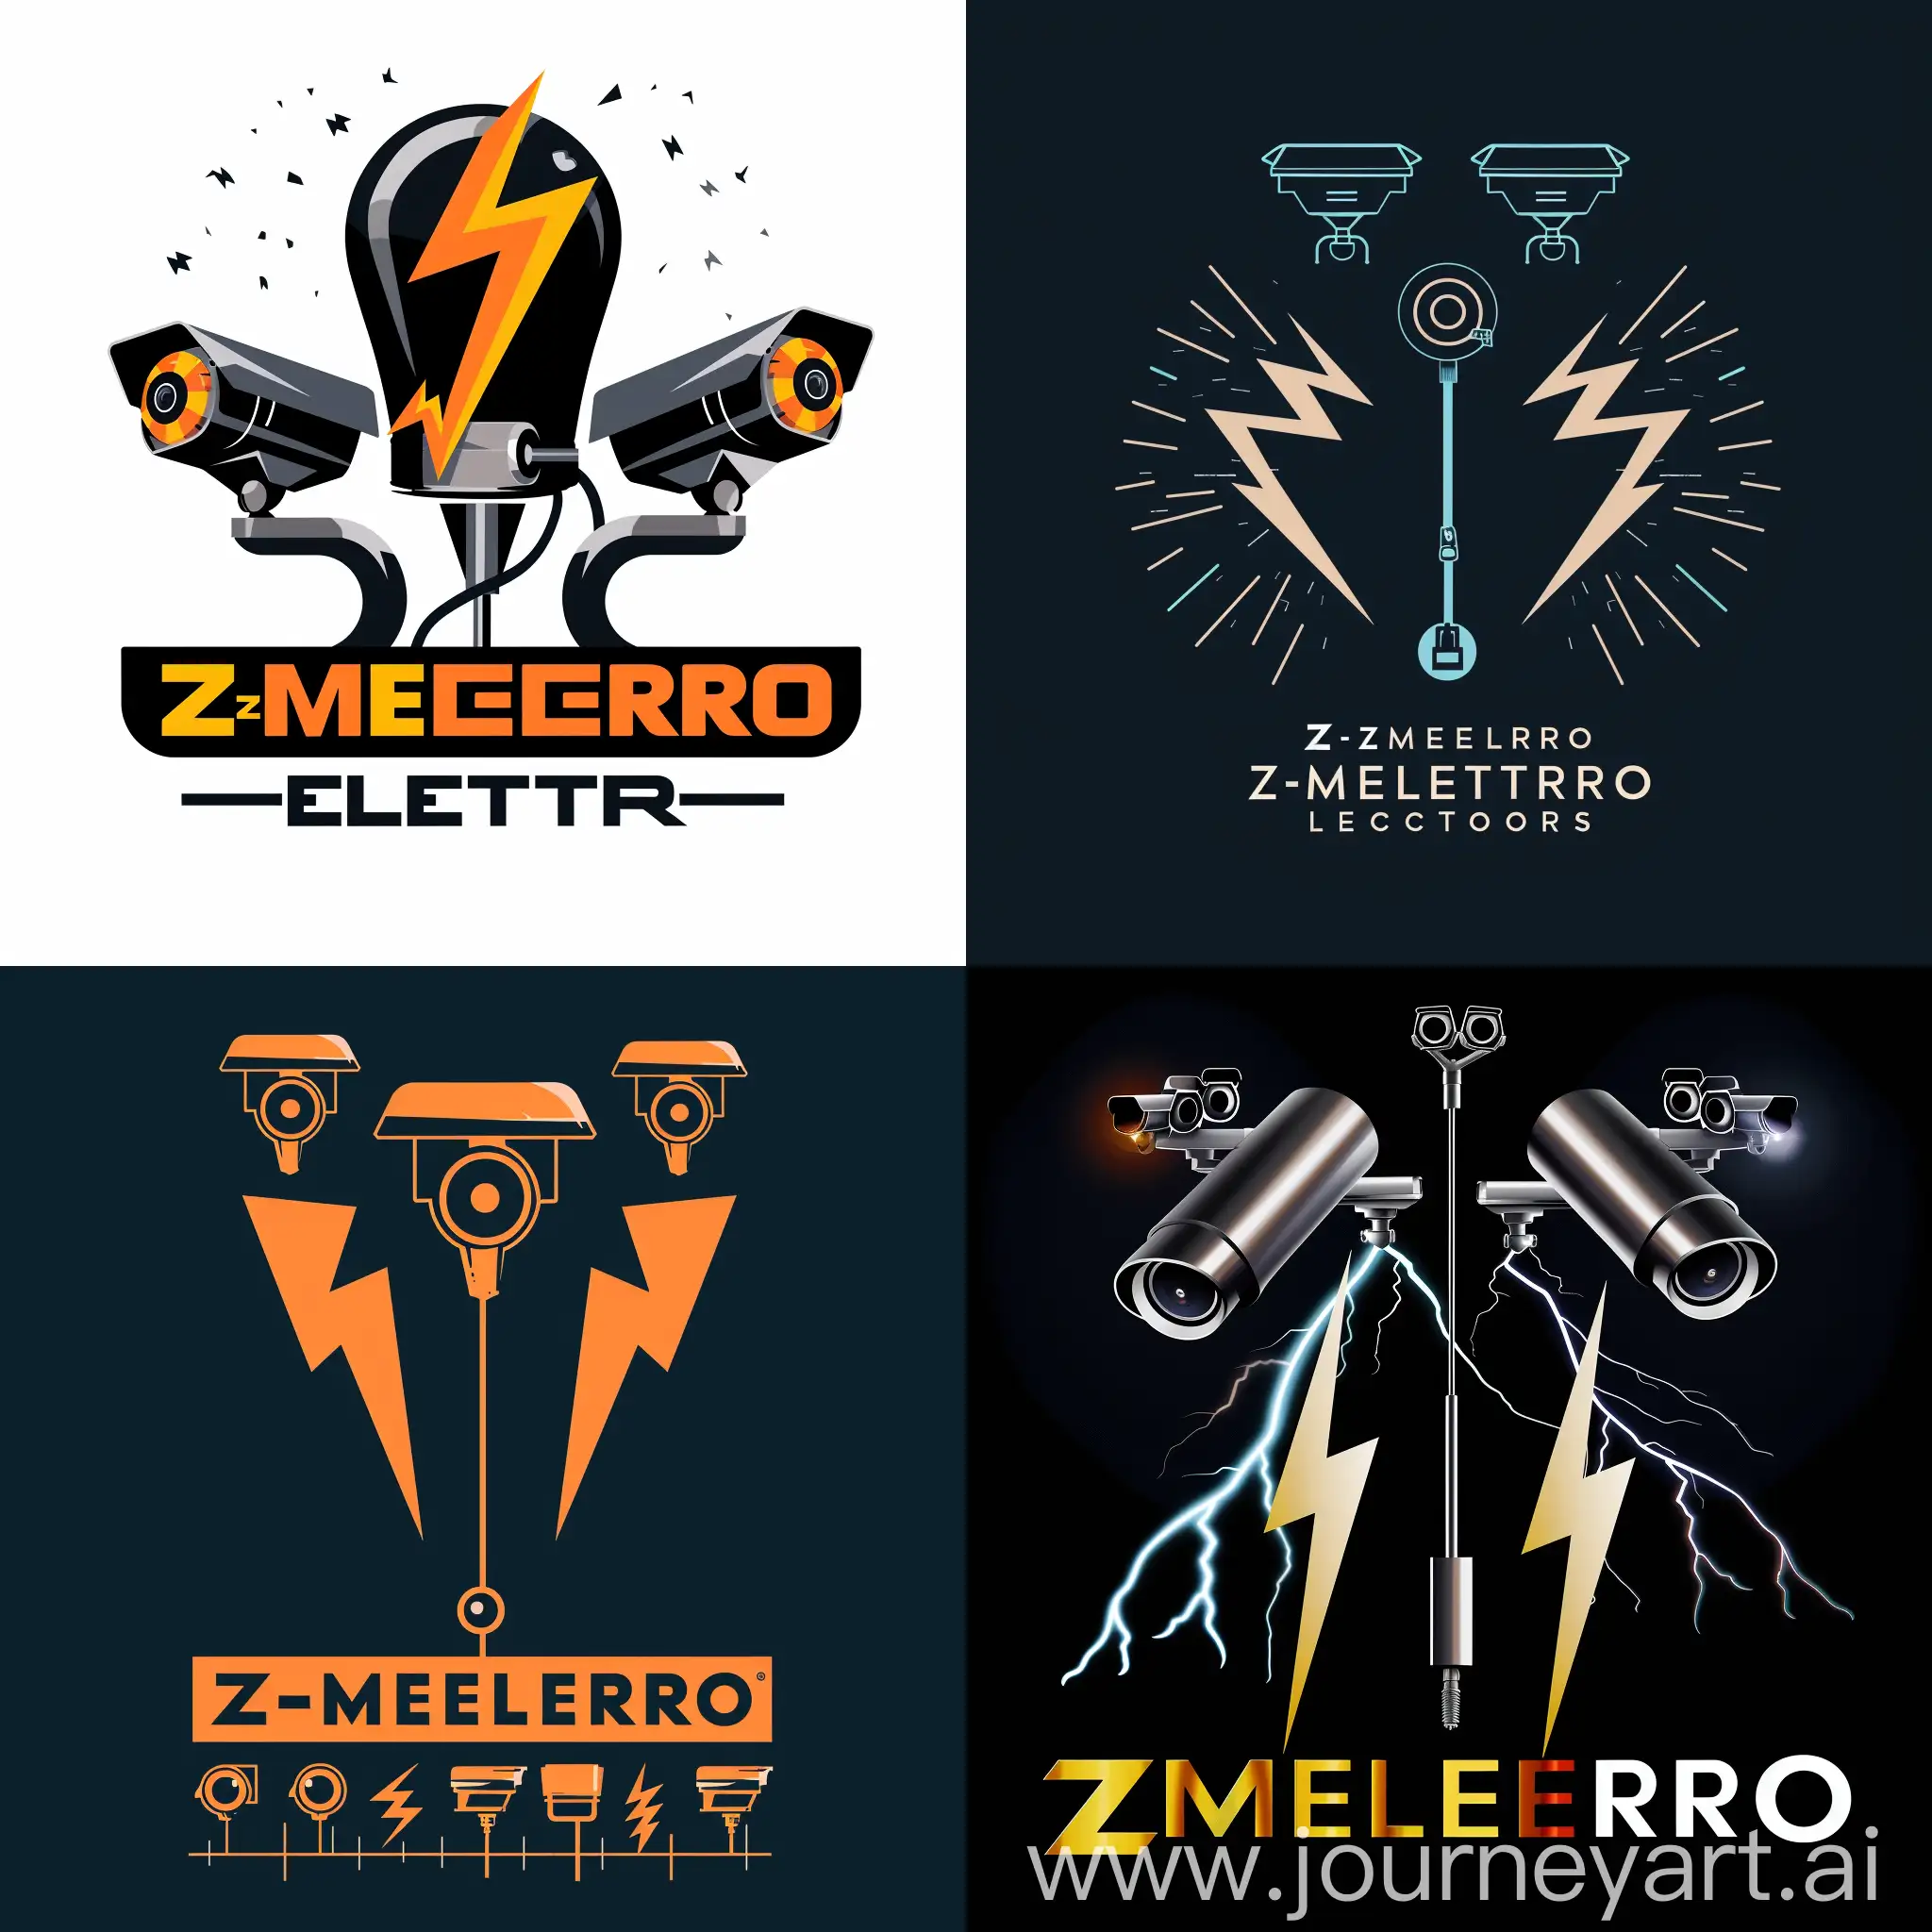 ZMelektro-Company-Logo-with-Lightning-Bolts-and-Security-Cameras